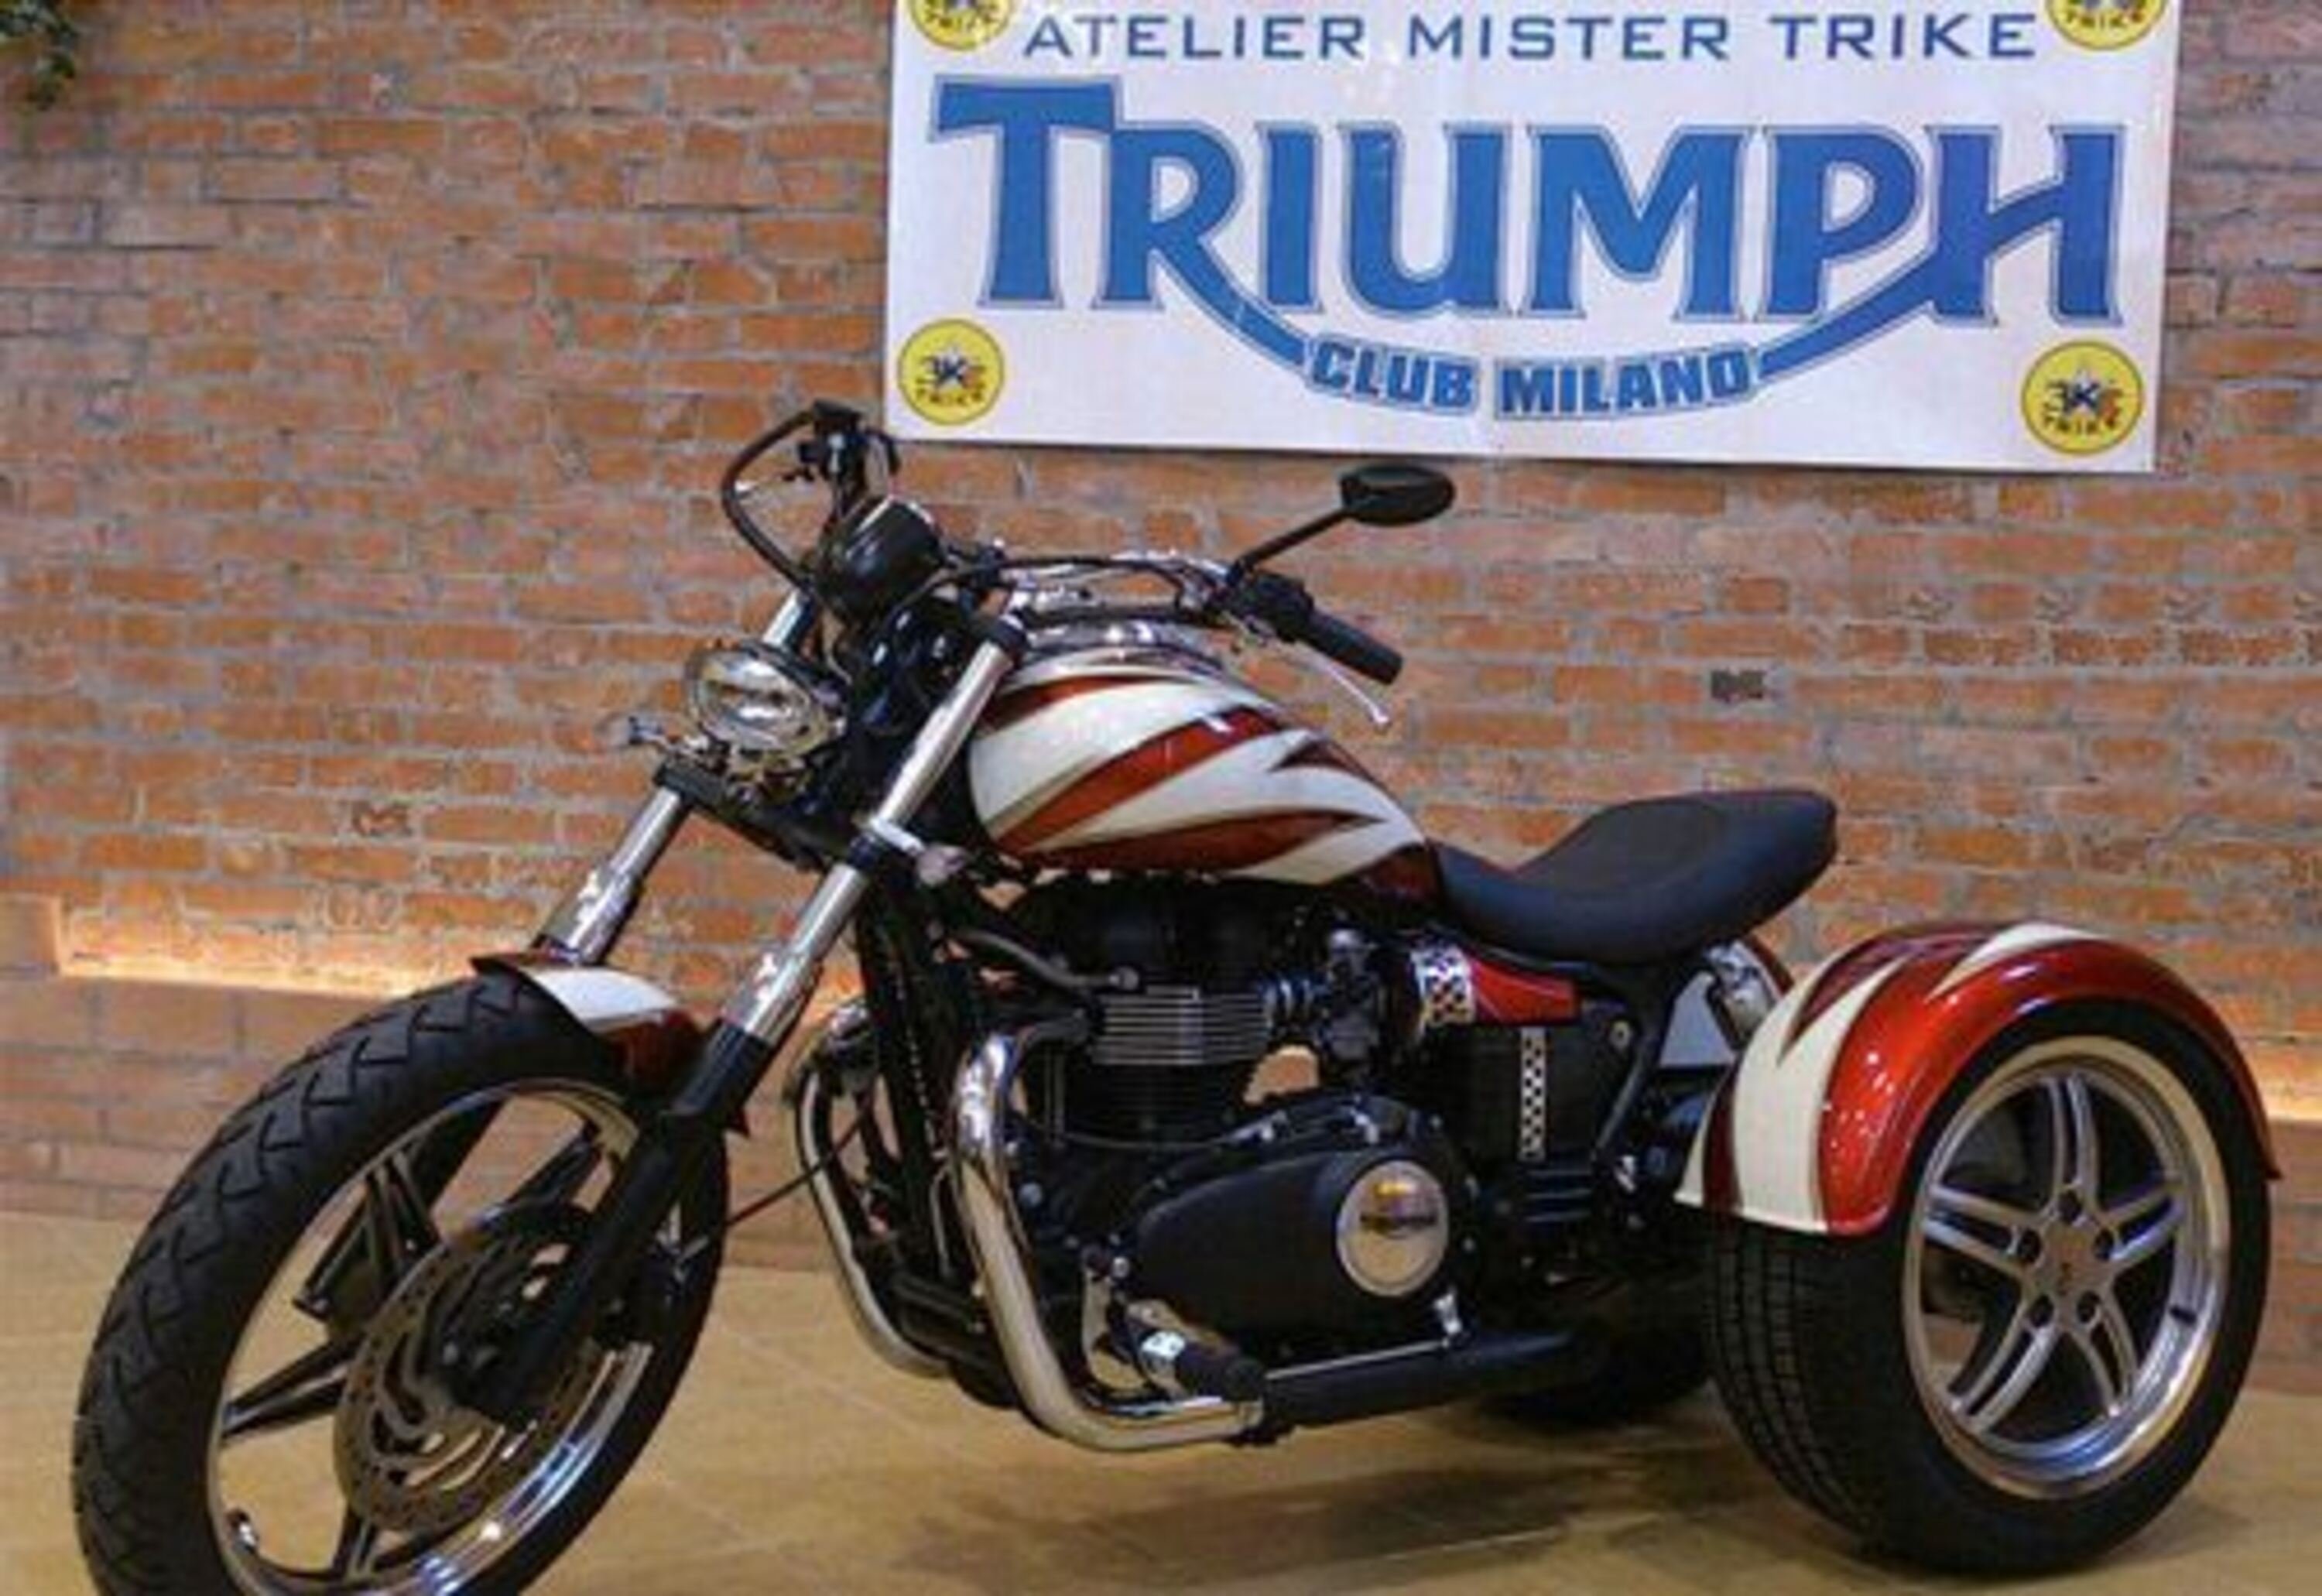 Mister Trike Triumph Triumph Speedmaster (2013 - 14)